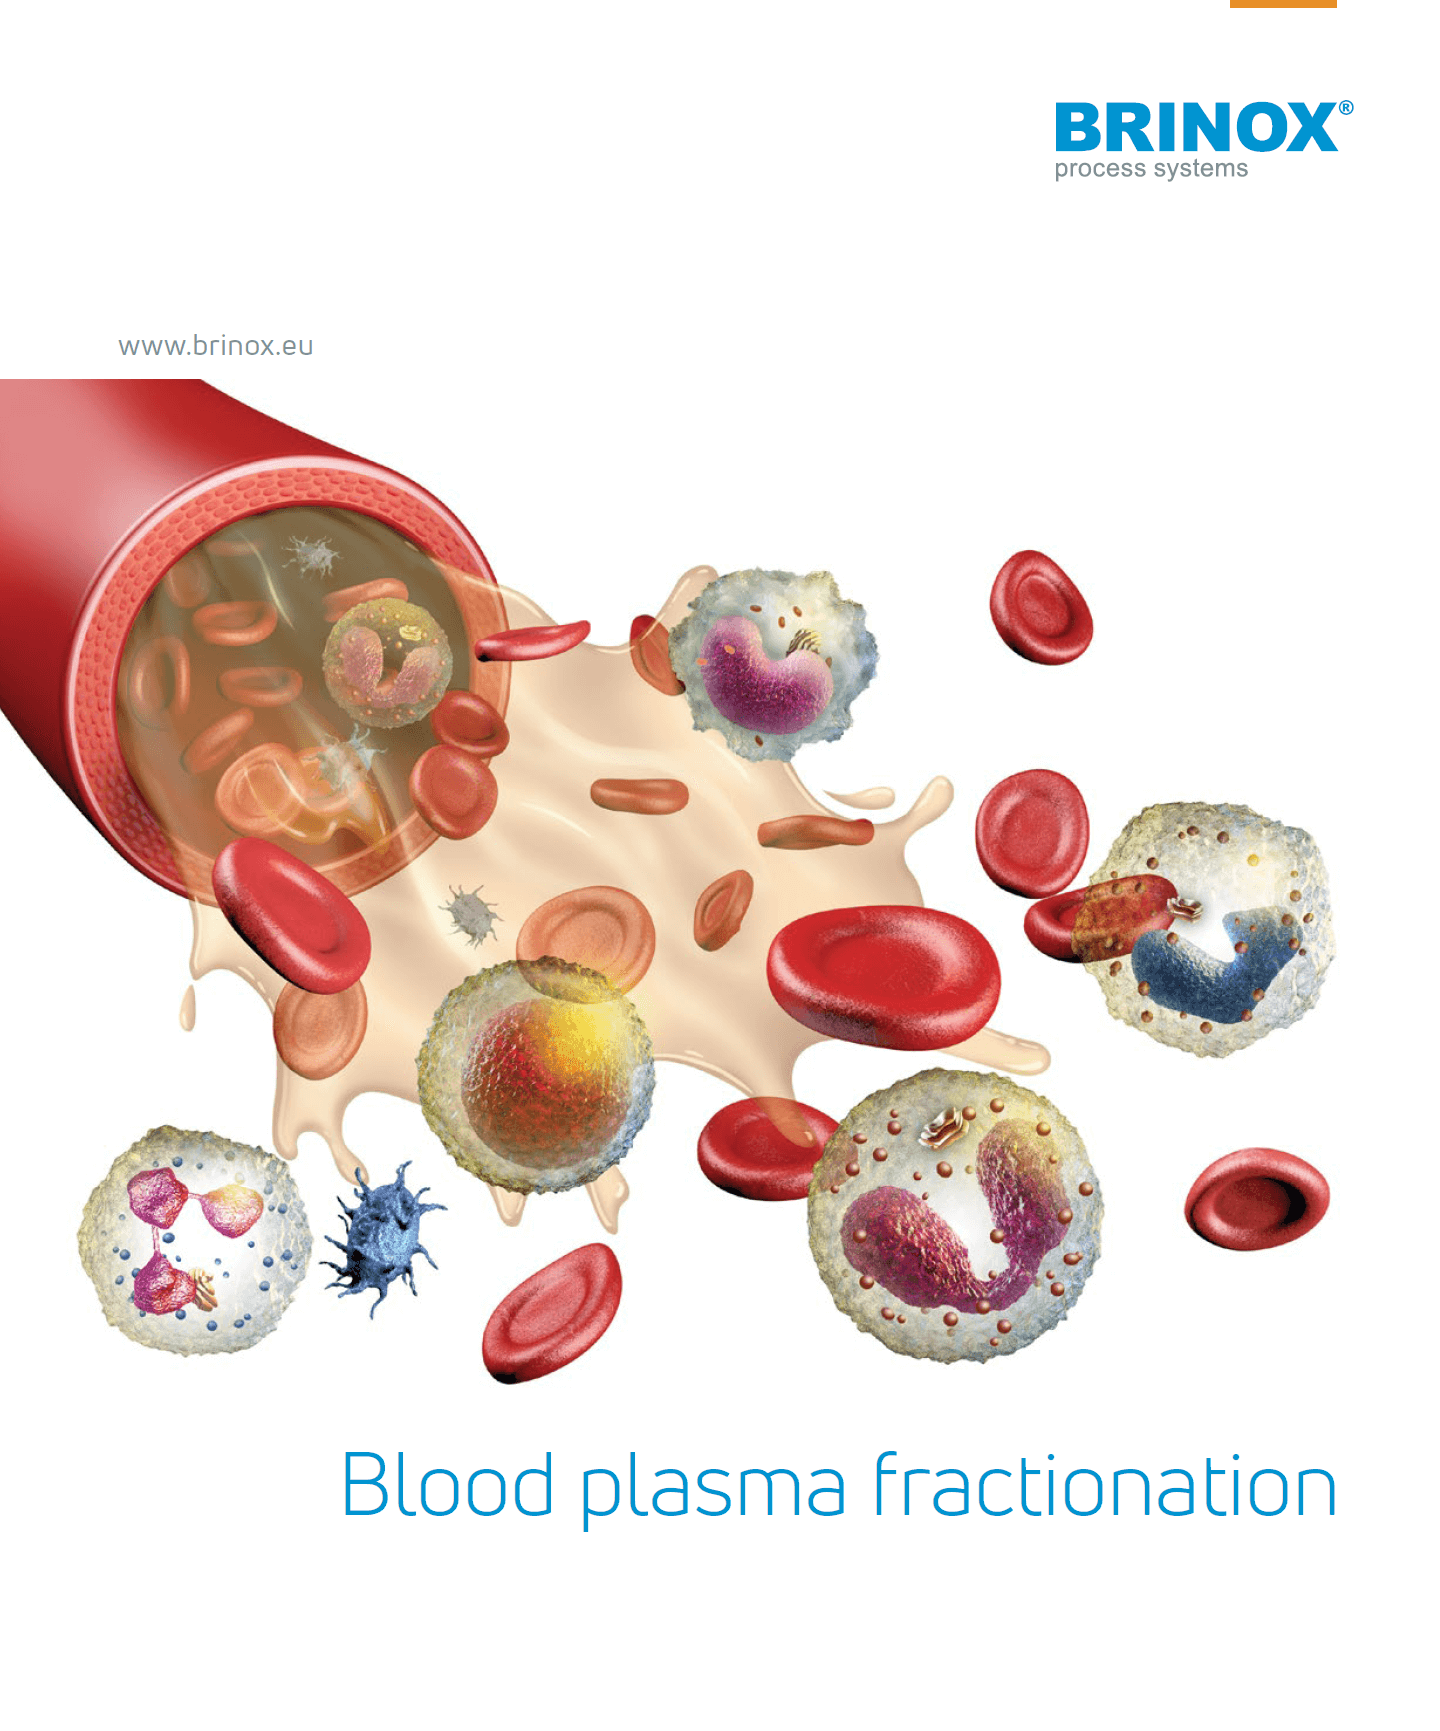  blood plasma fractionation